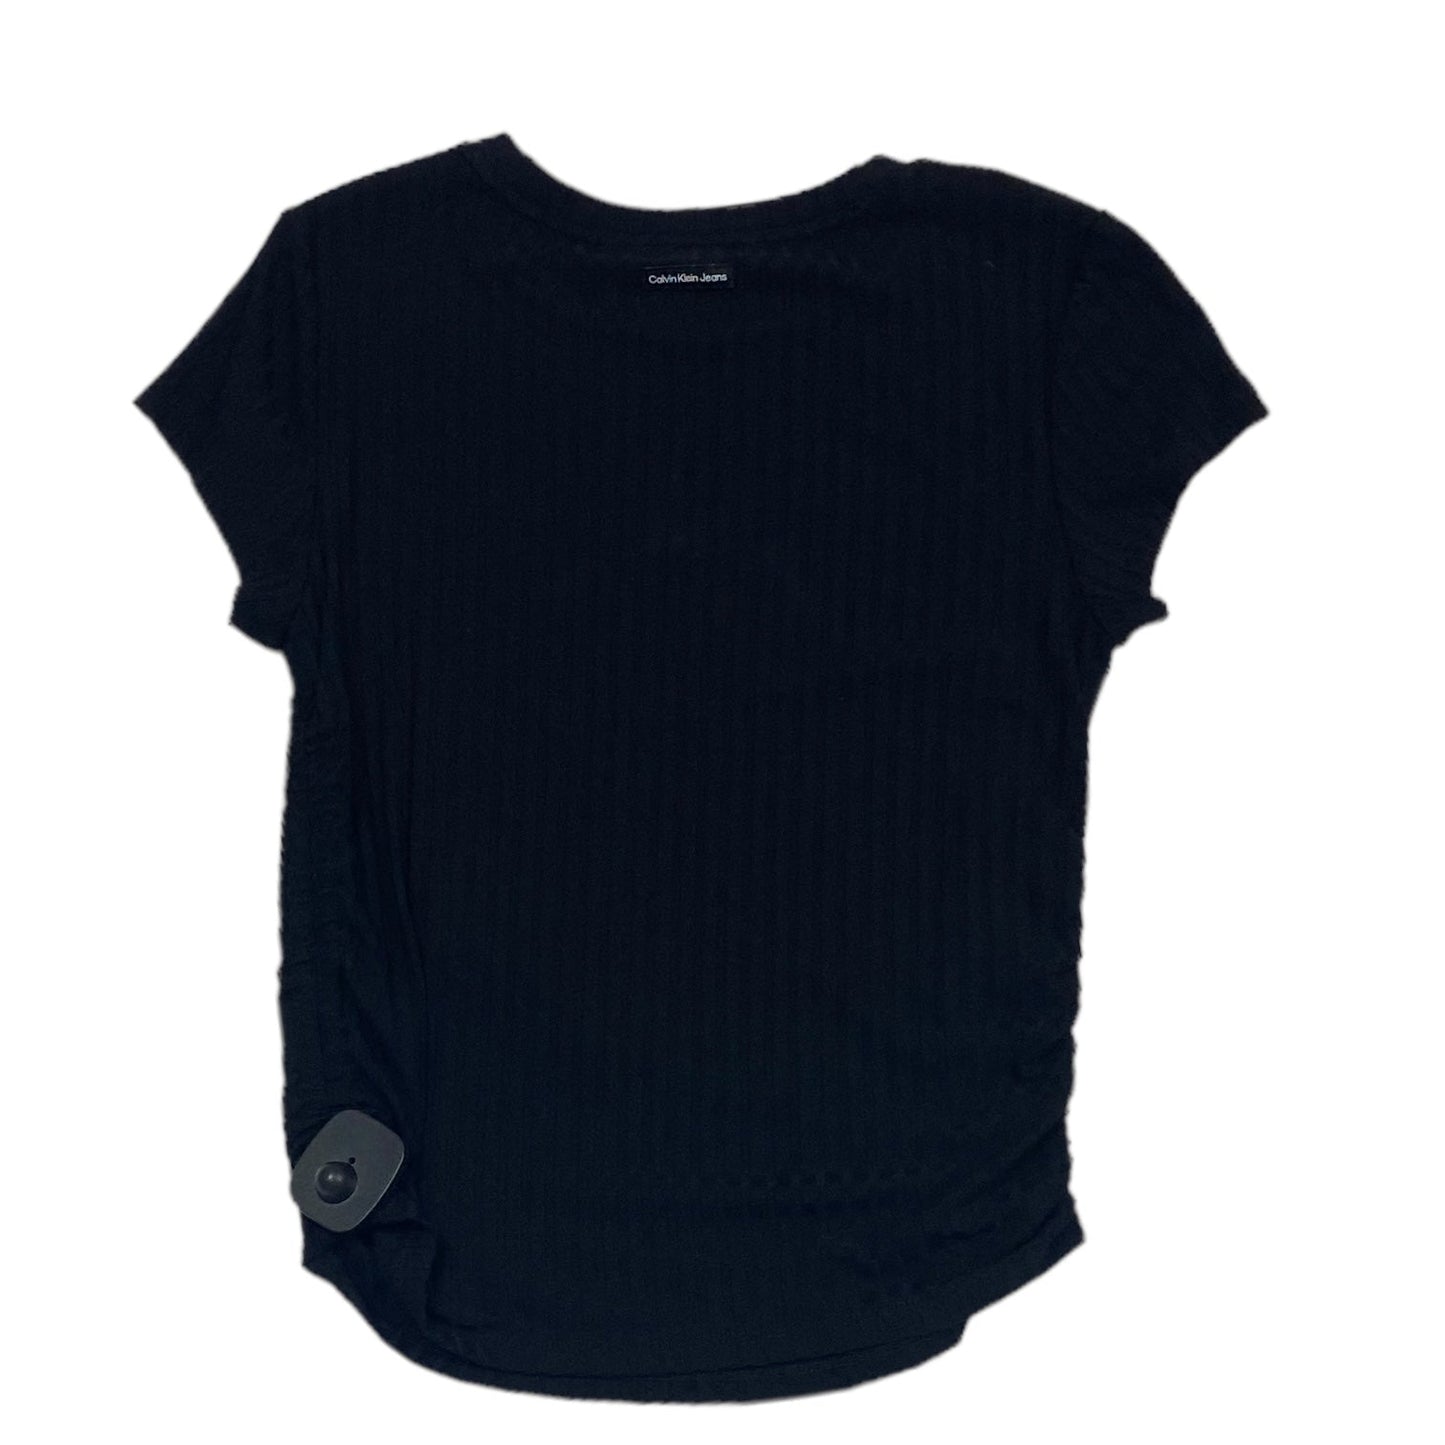 Black Top Short Sleeve Calvin Klein, Size M